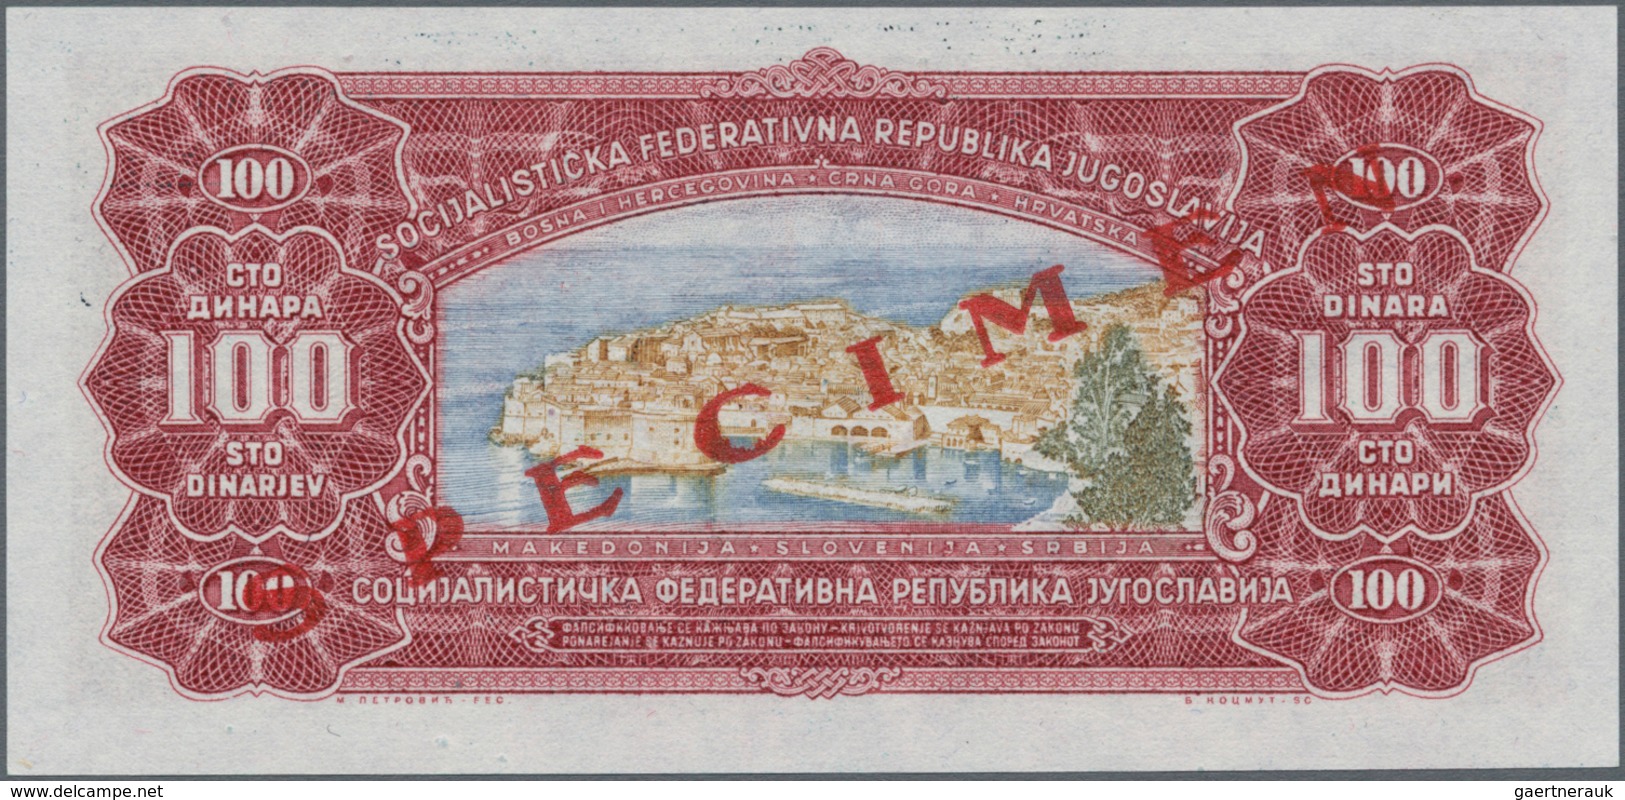 Yugoslavia / Jugoslavien: Complete Specimen set of the 1963 series with 100, 500, 1000 and 5000 Dina